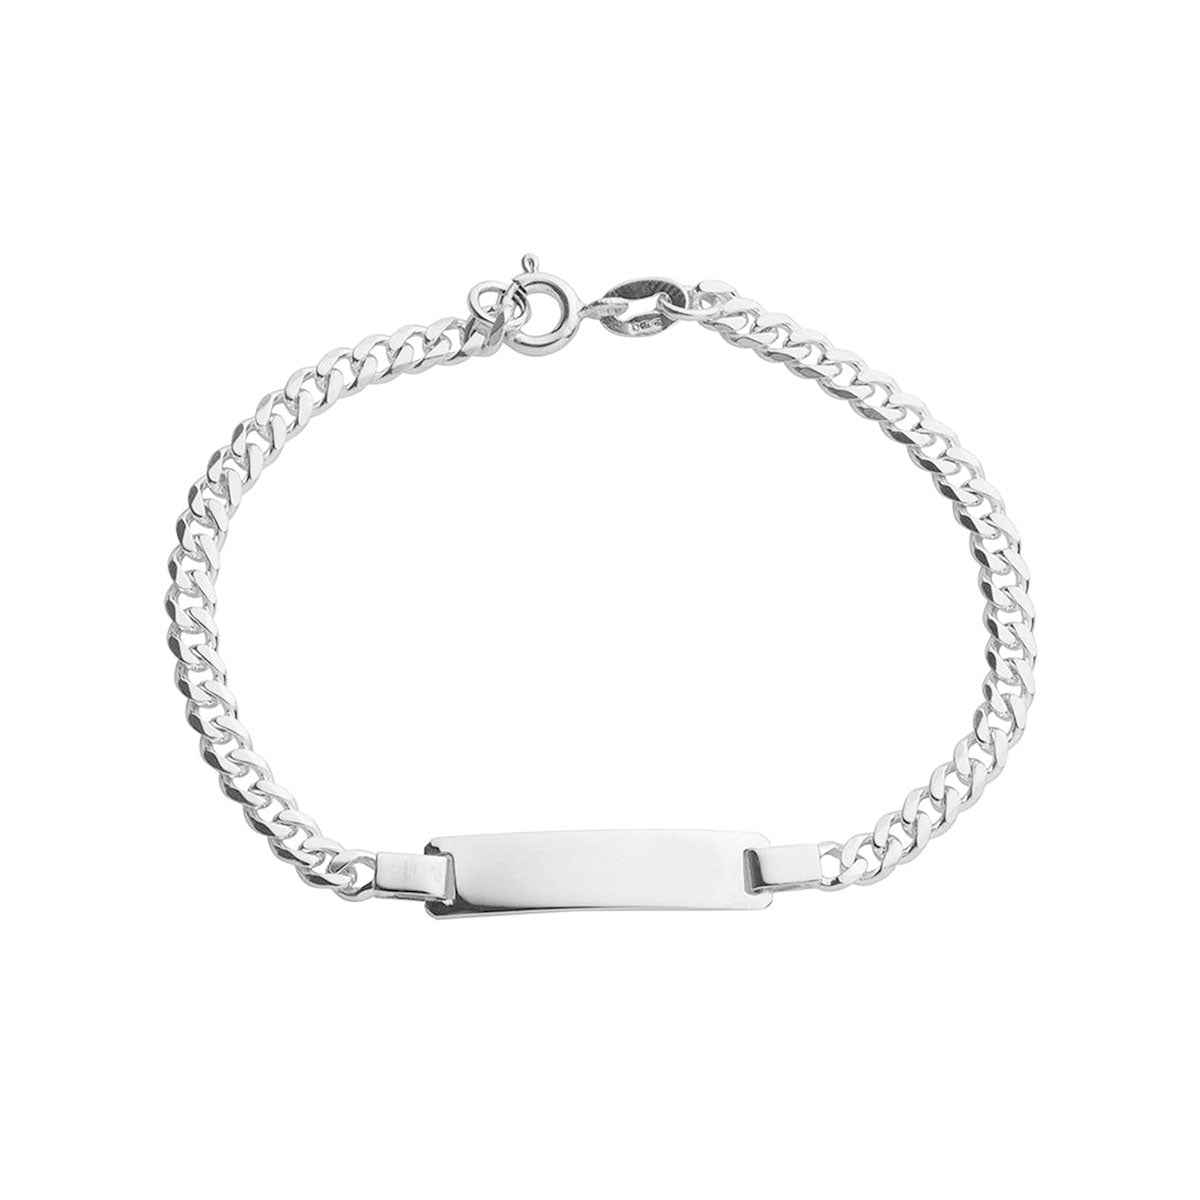 Silver Childs Identity Bracelet | Hersey & Son Silversmiths